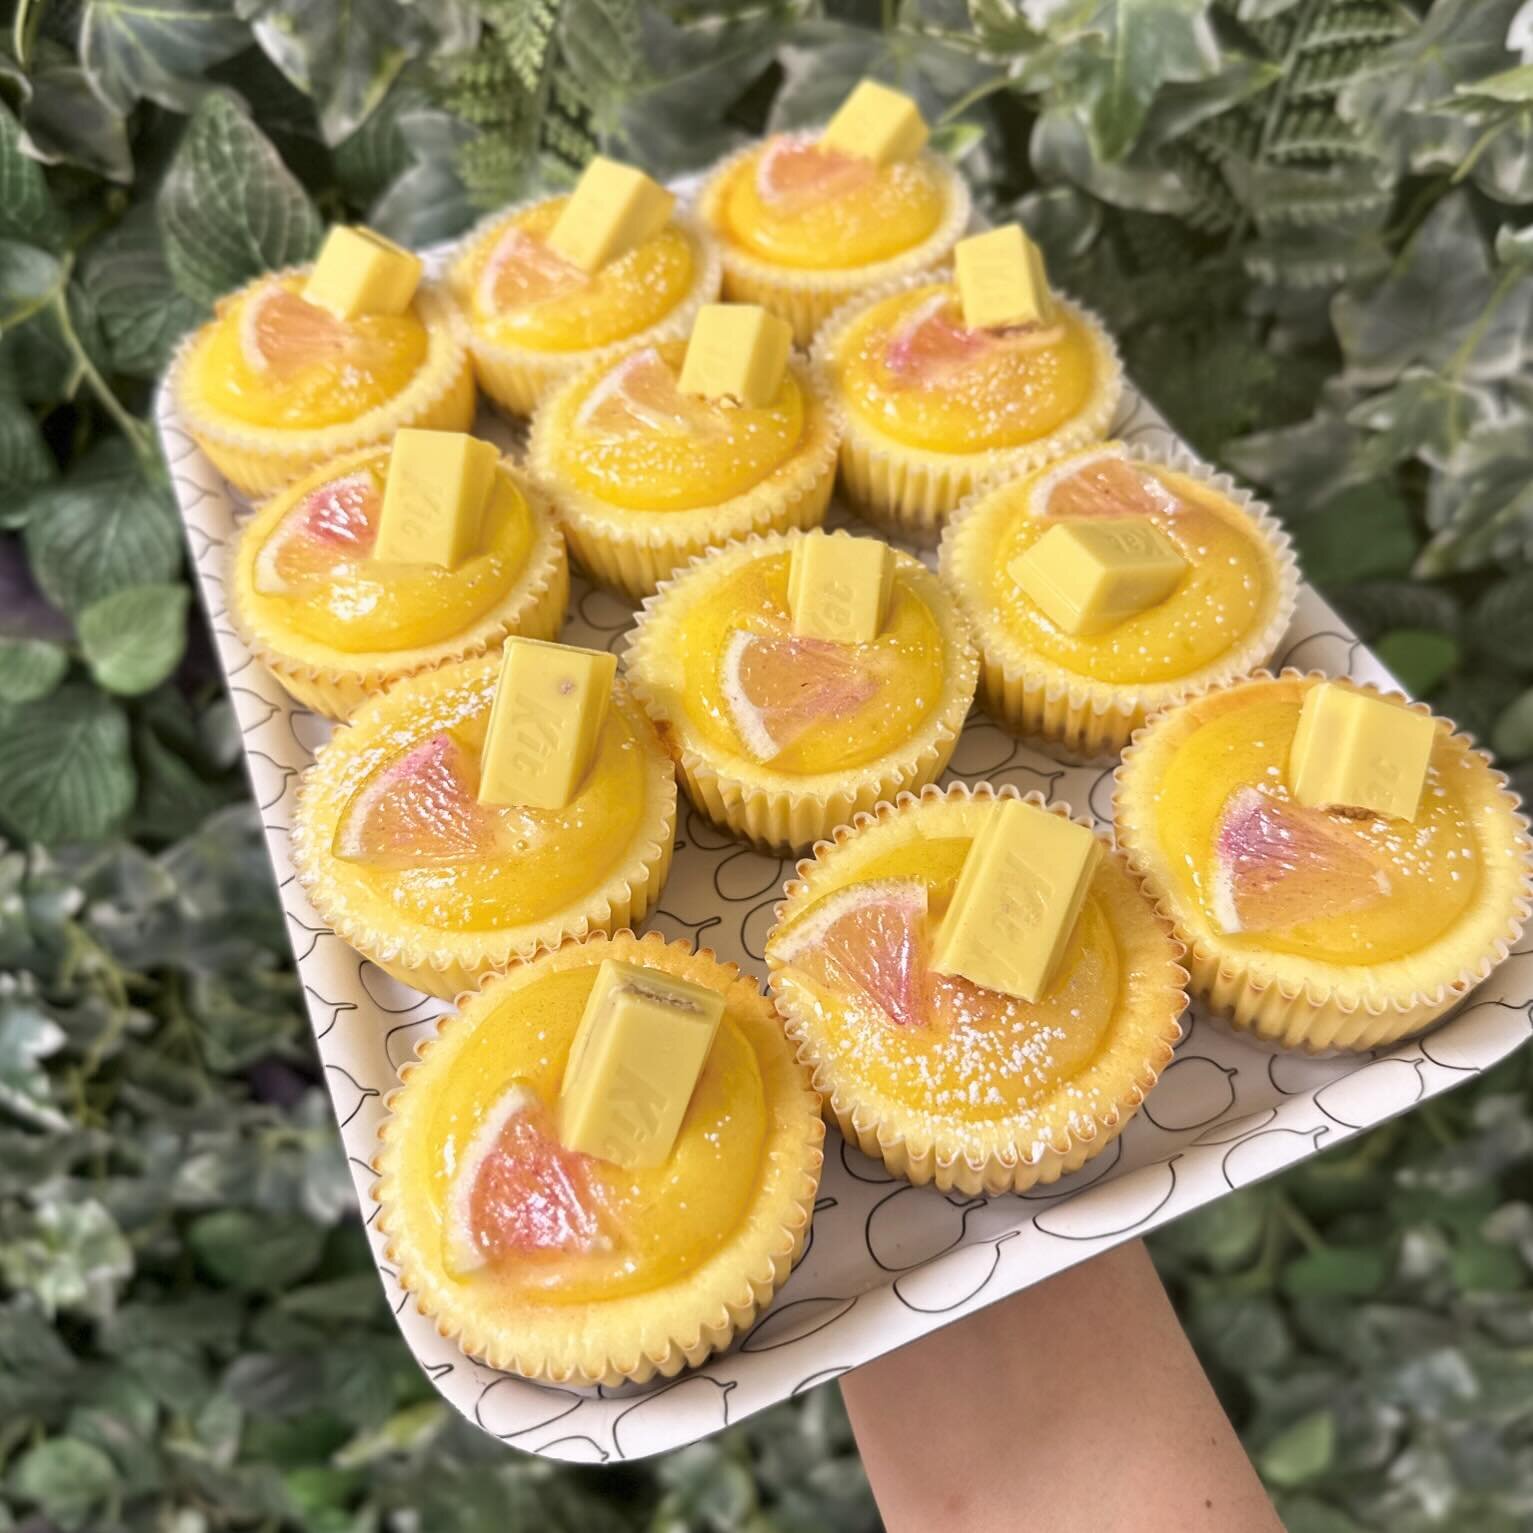 Mini lemon cheesecakes with lemon curd and lemon Kit Kat. 
Just patiently waiting for warmer weather 😎
.
.
.
.
#emmasmacarons#frenchmacarons#macarons#sweets
#matcha#strawberry#matchstrawberry#desserts
#foodies#macaronslady#macaronstagram#macaronlove